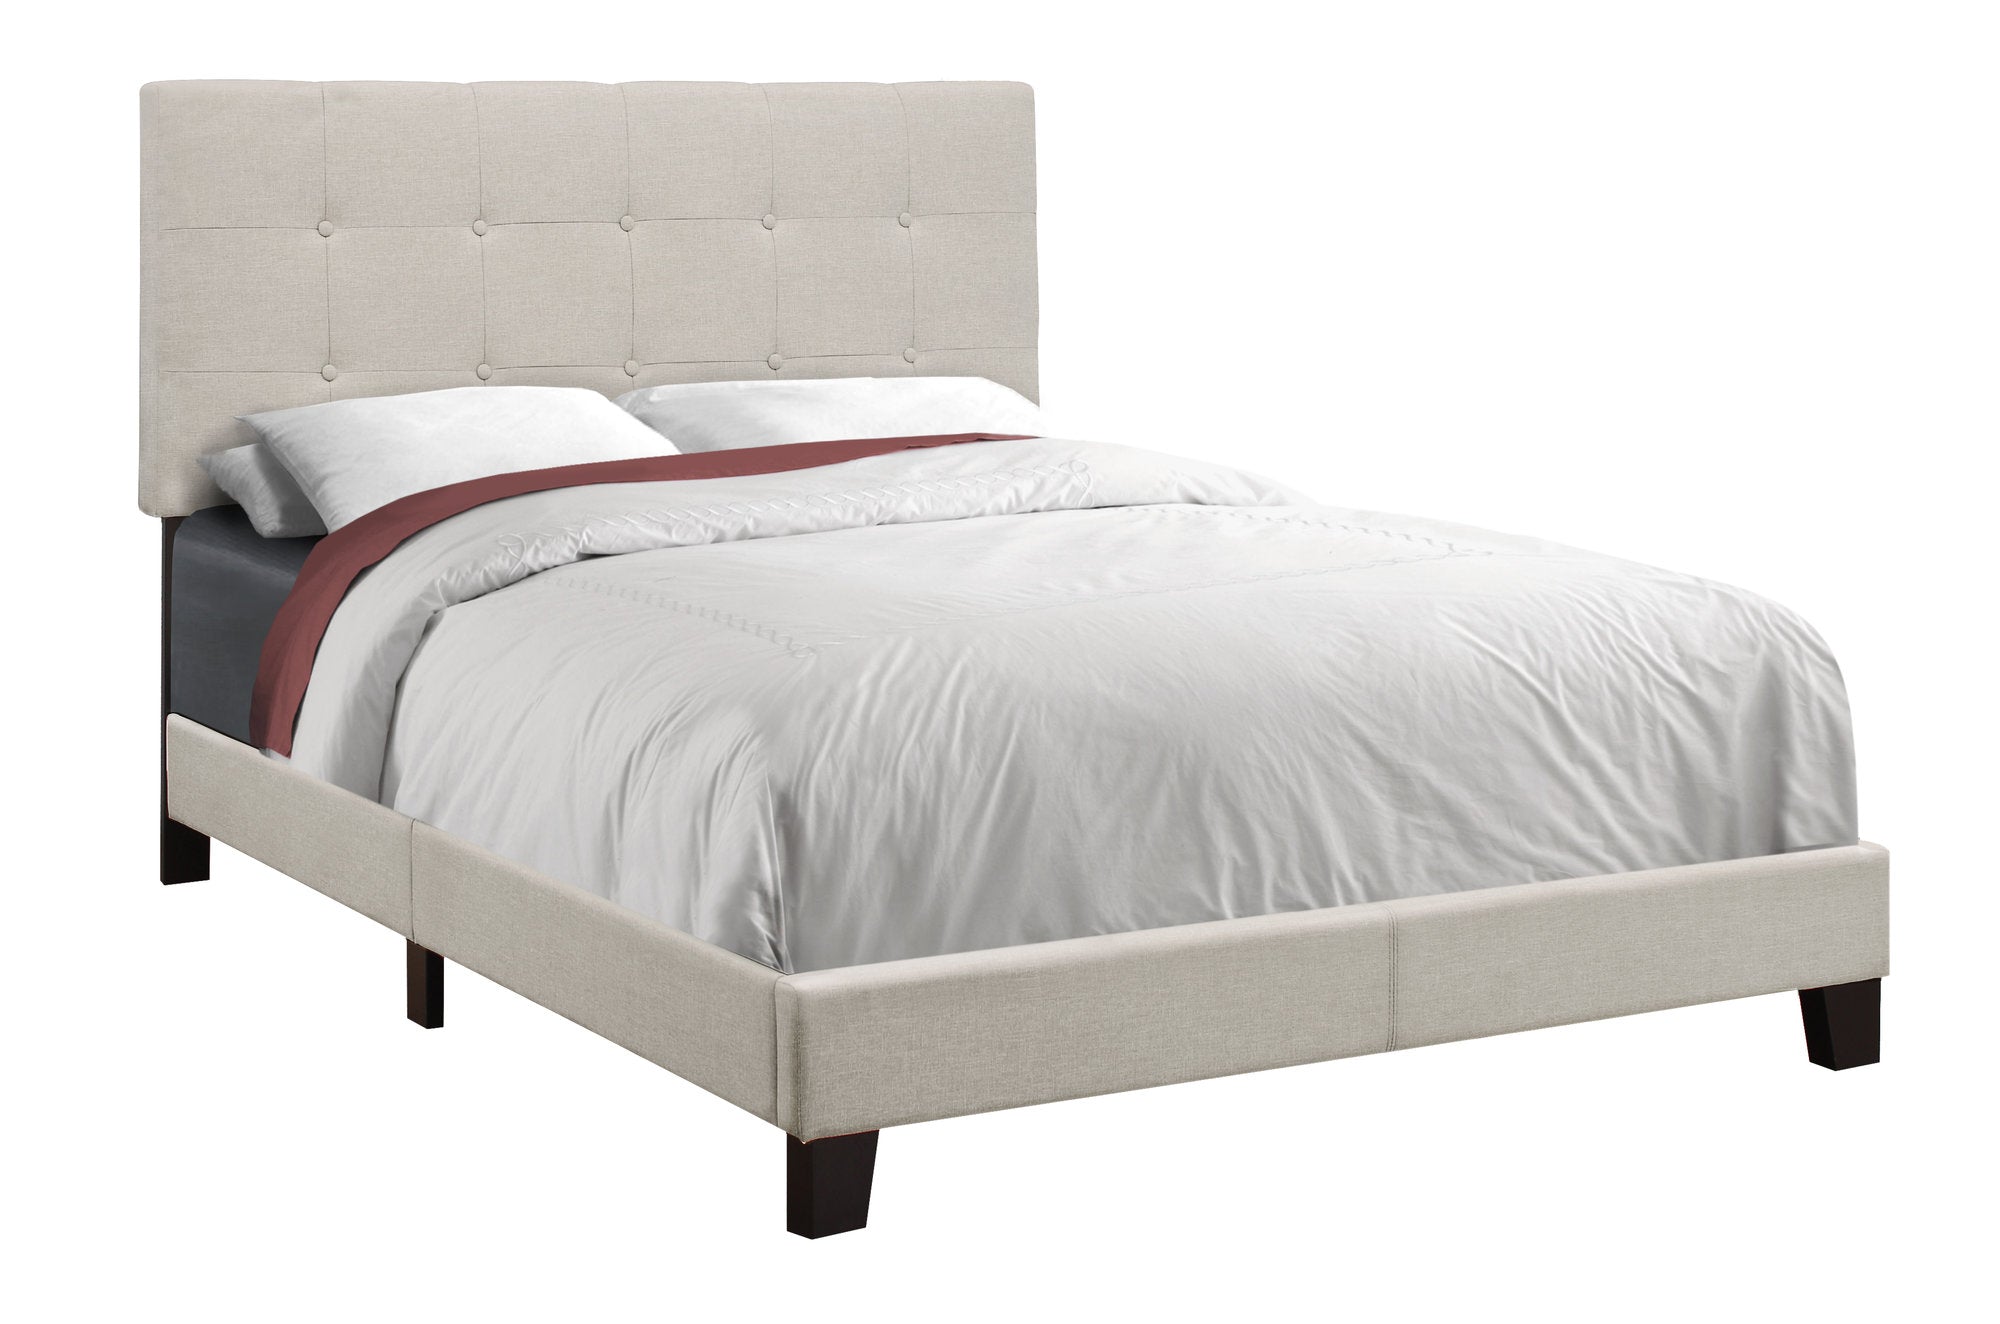 Bed - Full Size / Beige Linen